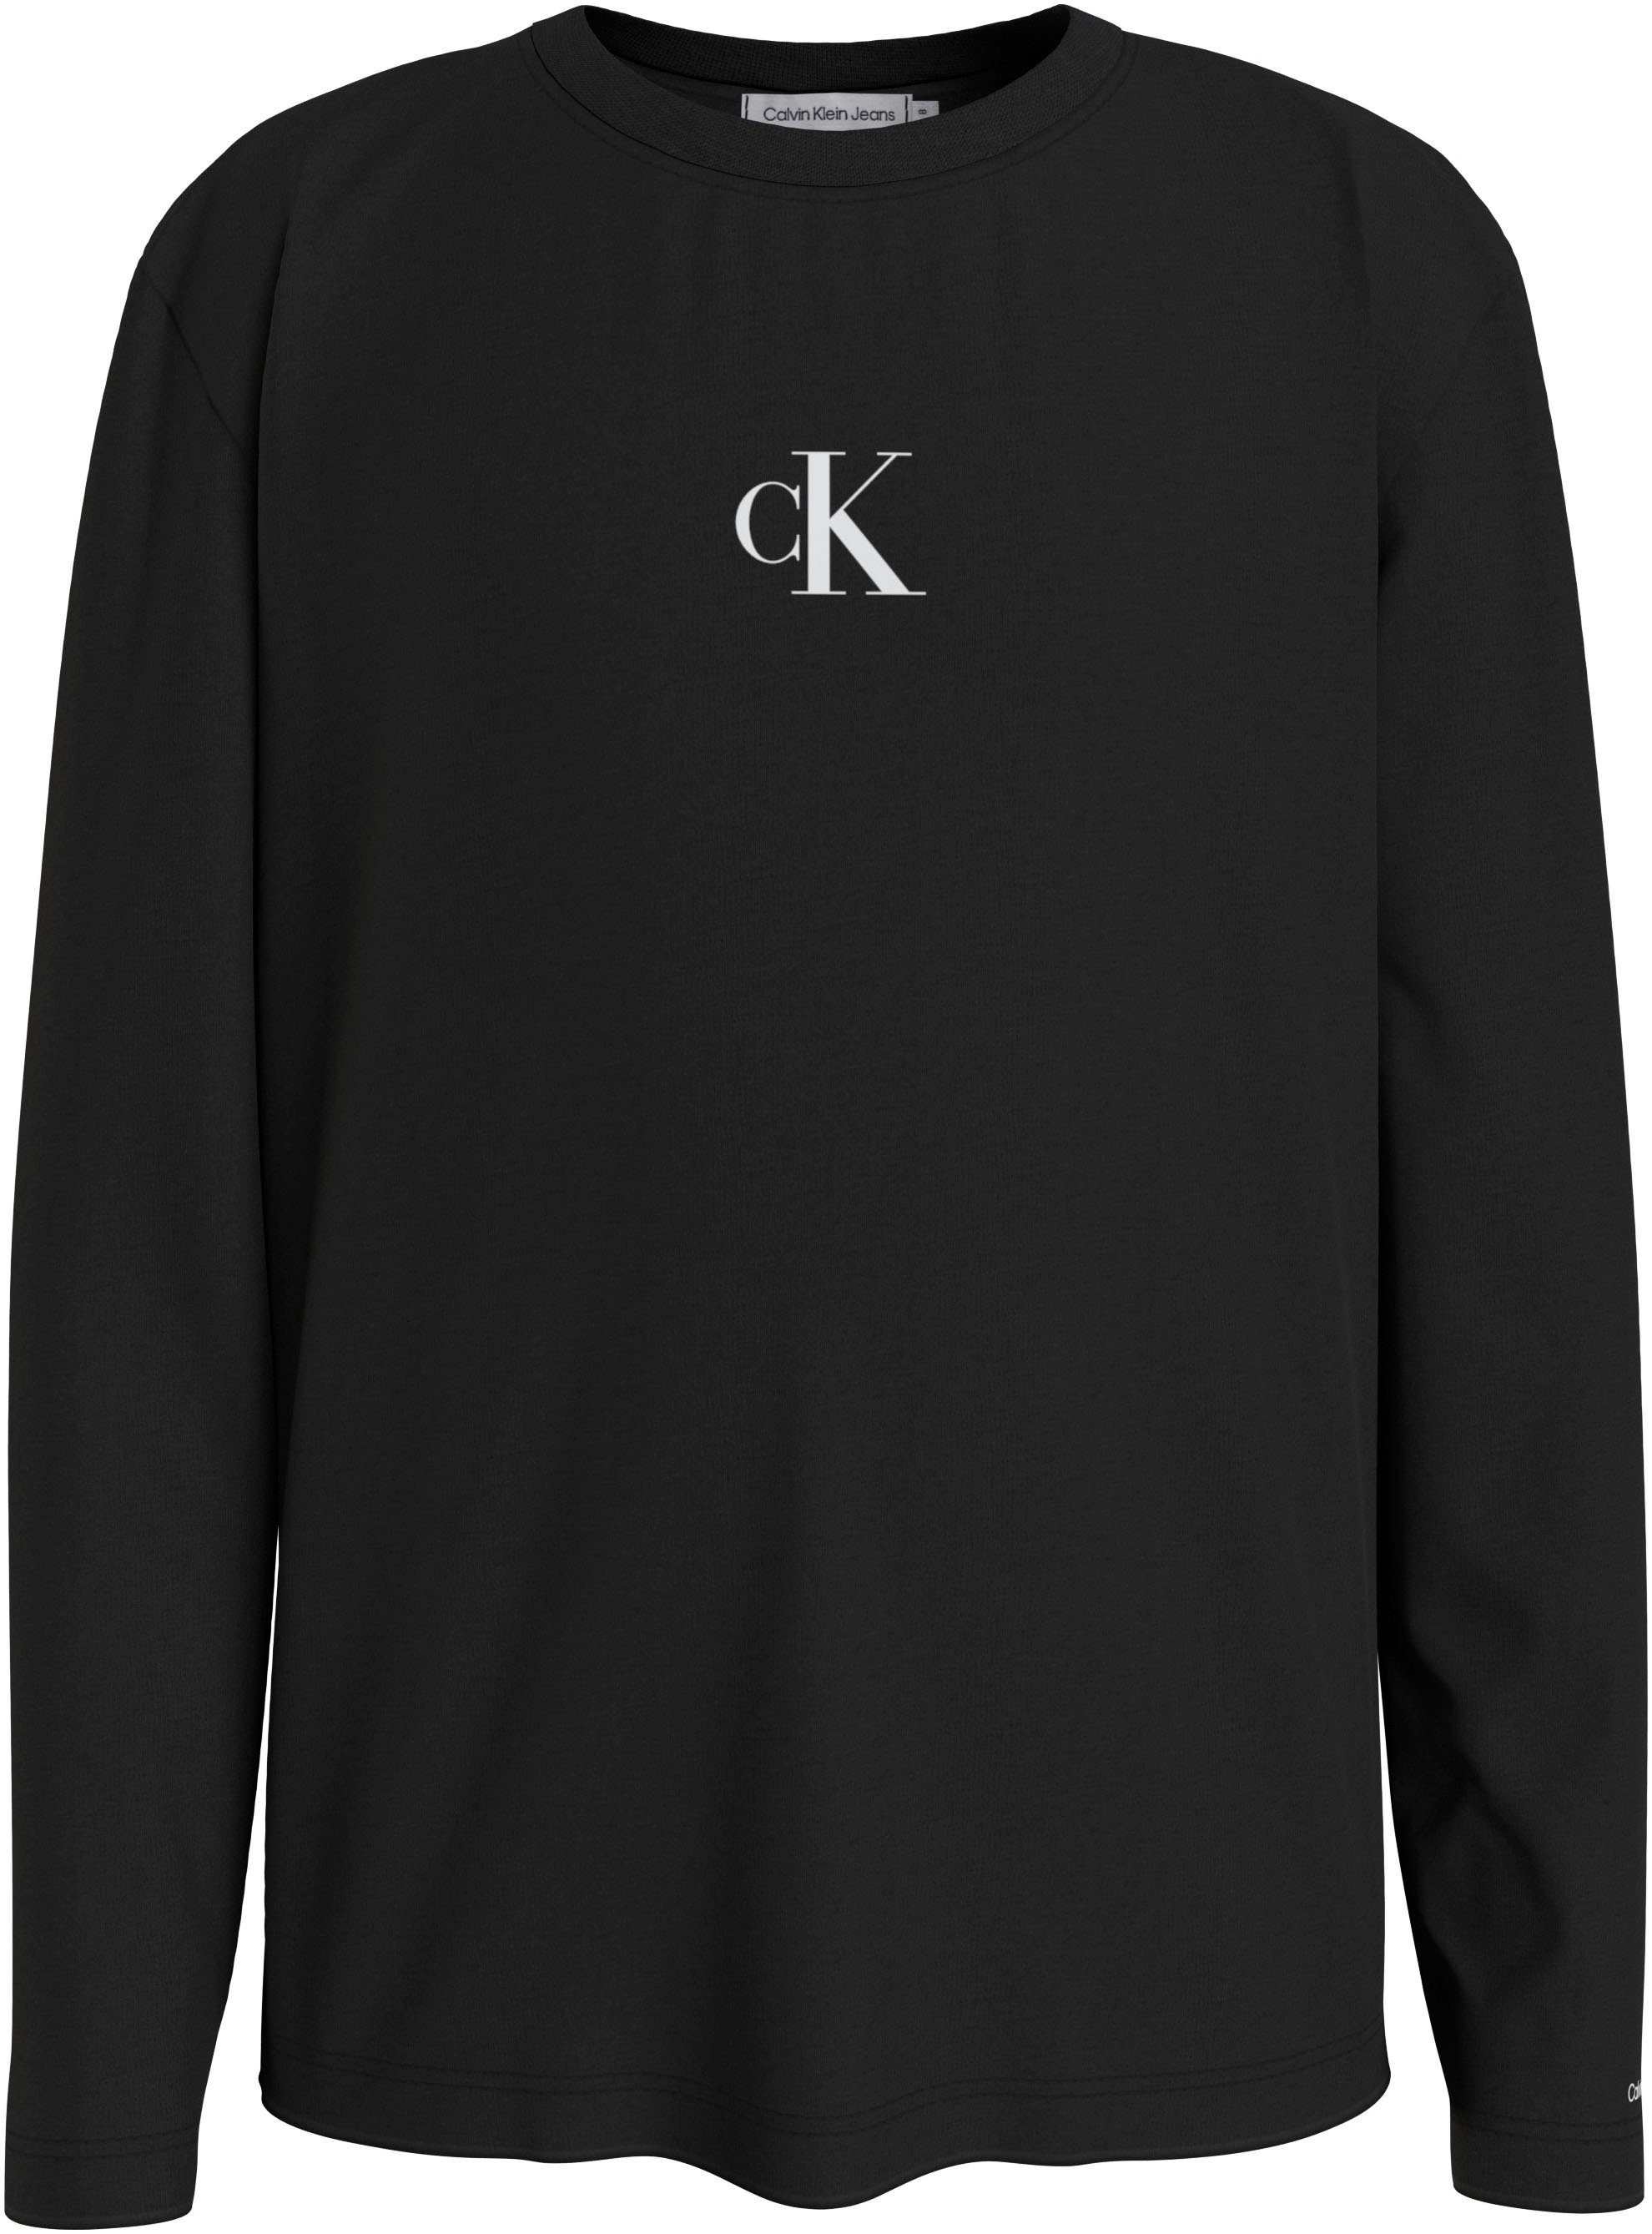 LS Calvin Klein CK T-SHIRT Ck Black Langarmshirt LOGO Jeans